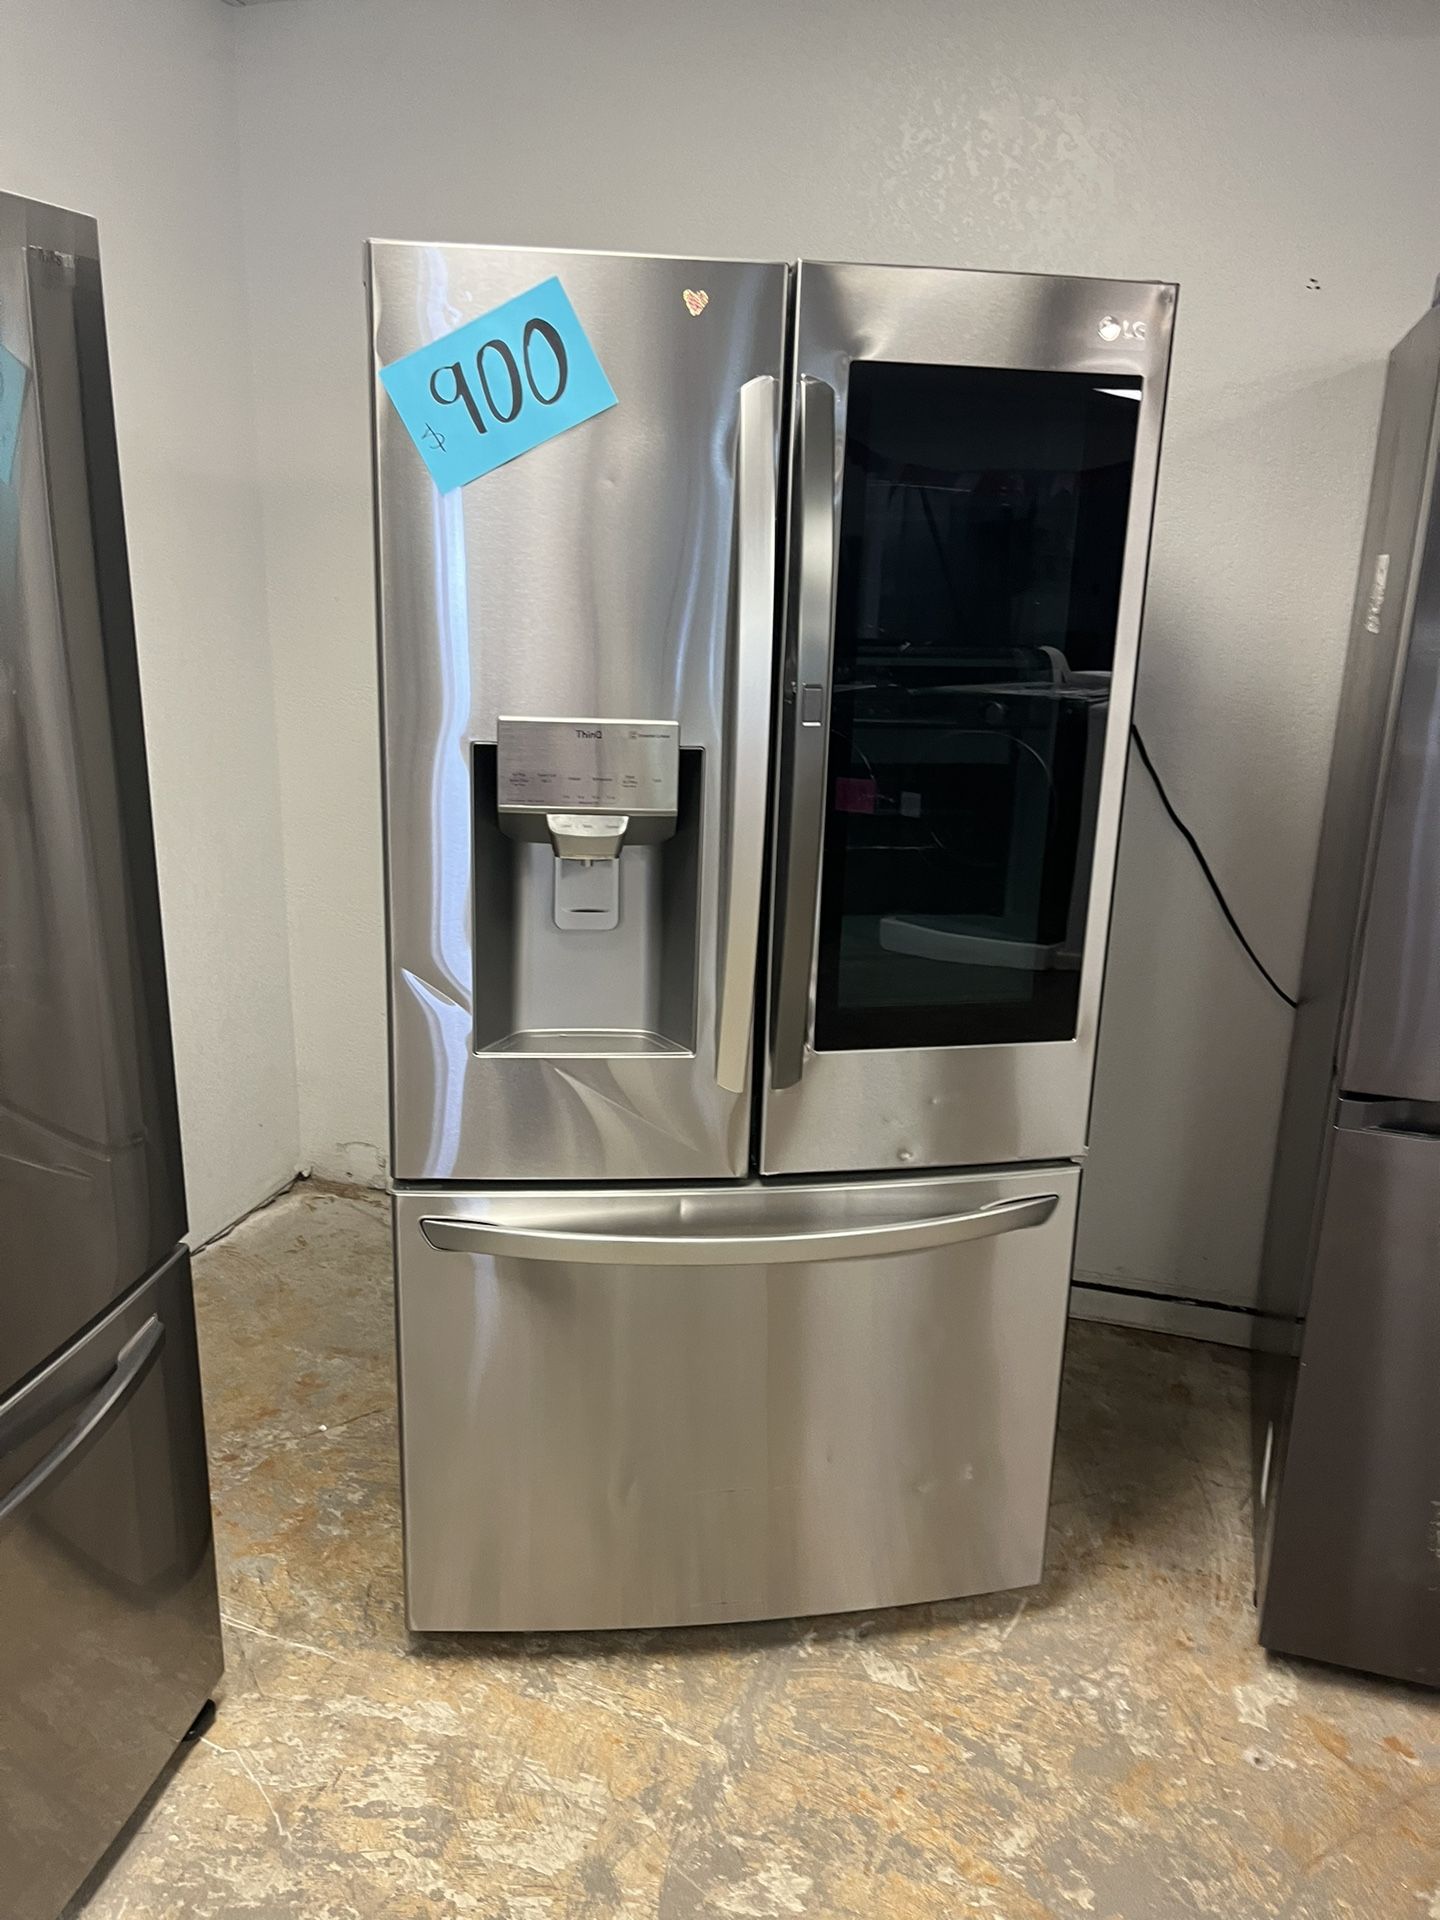 Lg-French door-fridge-sold As Is 